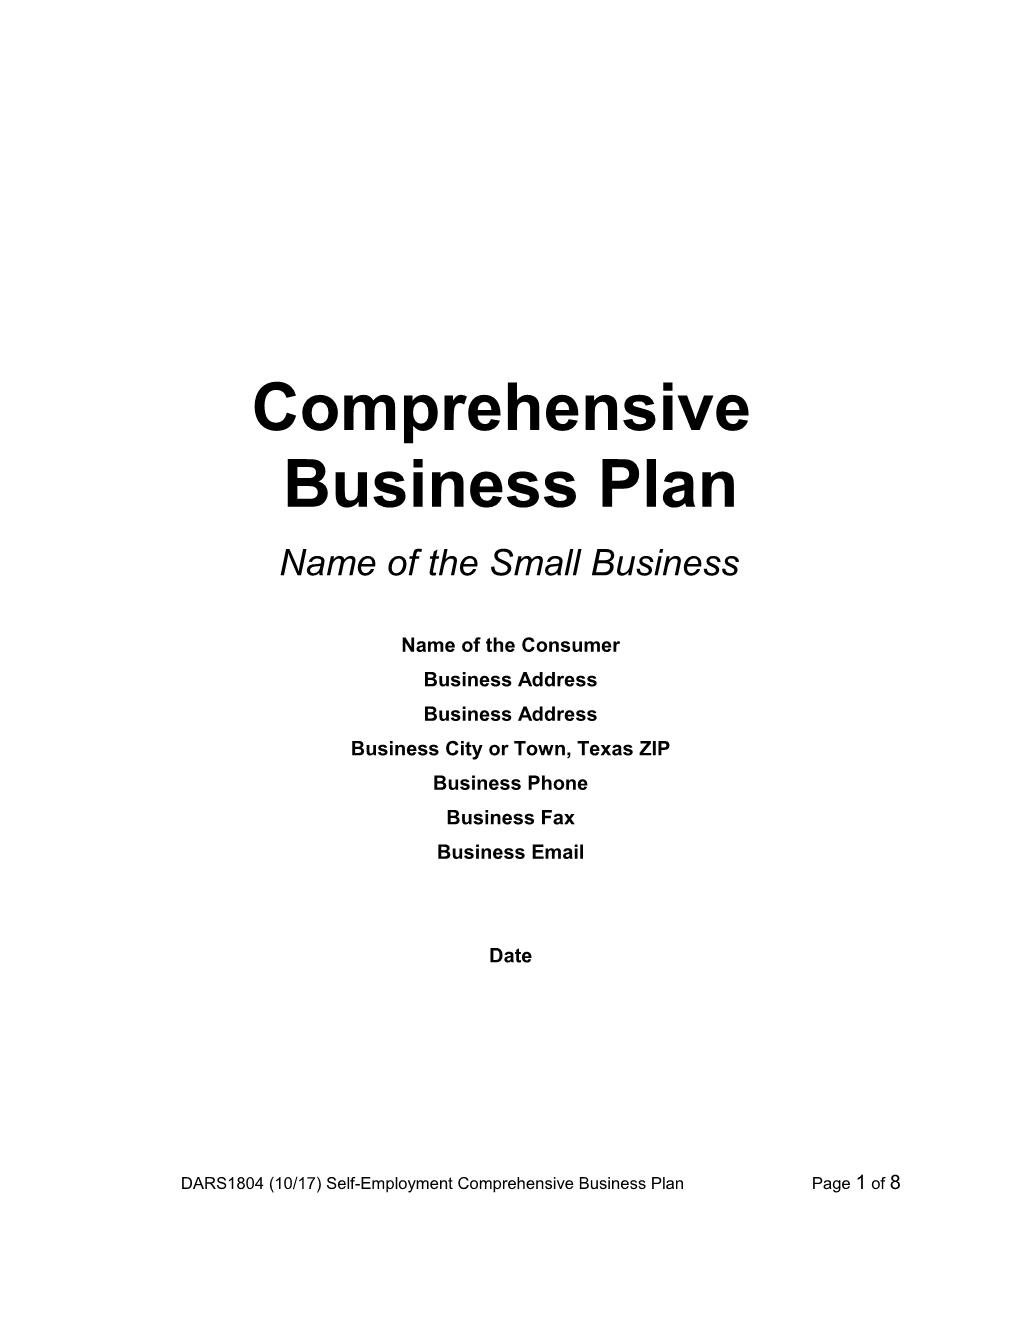 DARS1804 Self-Employment Comprehensive Business Plan